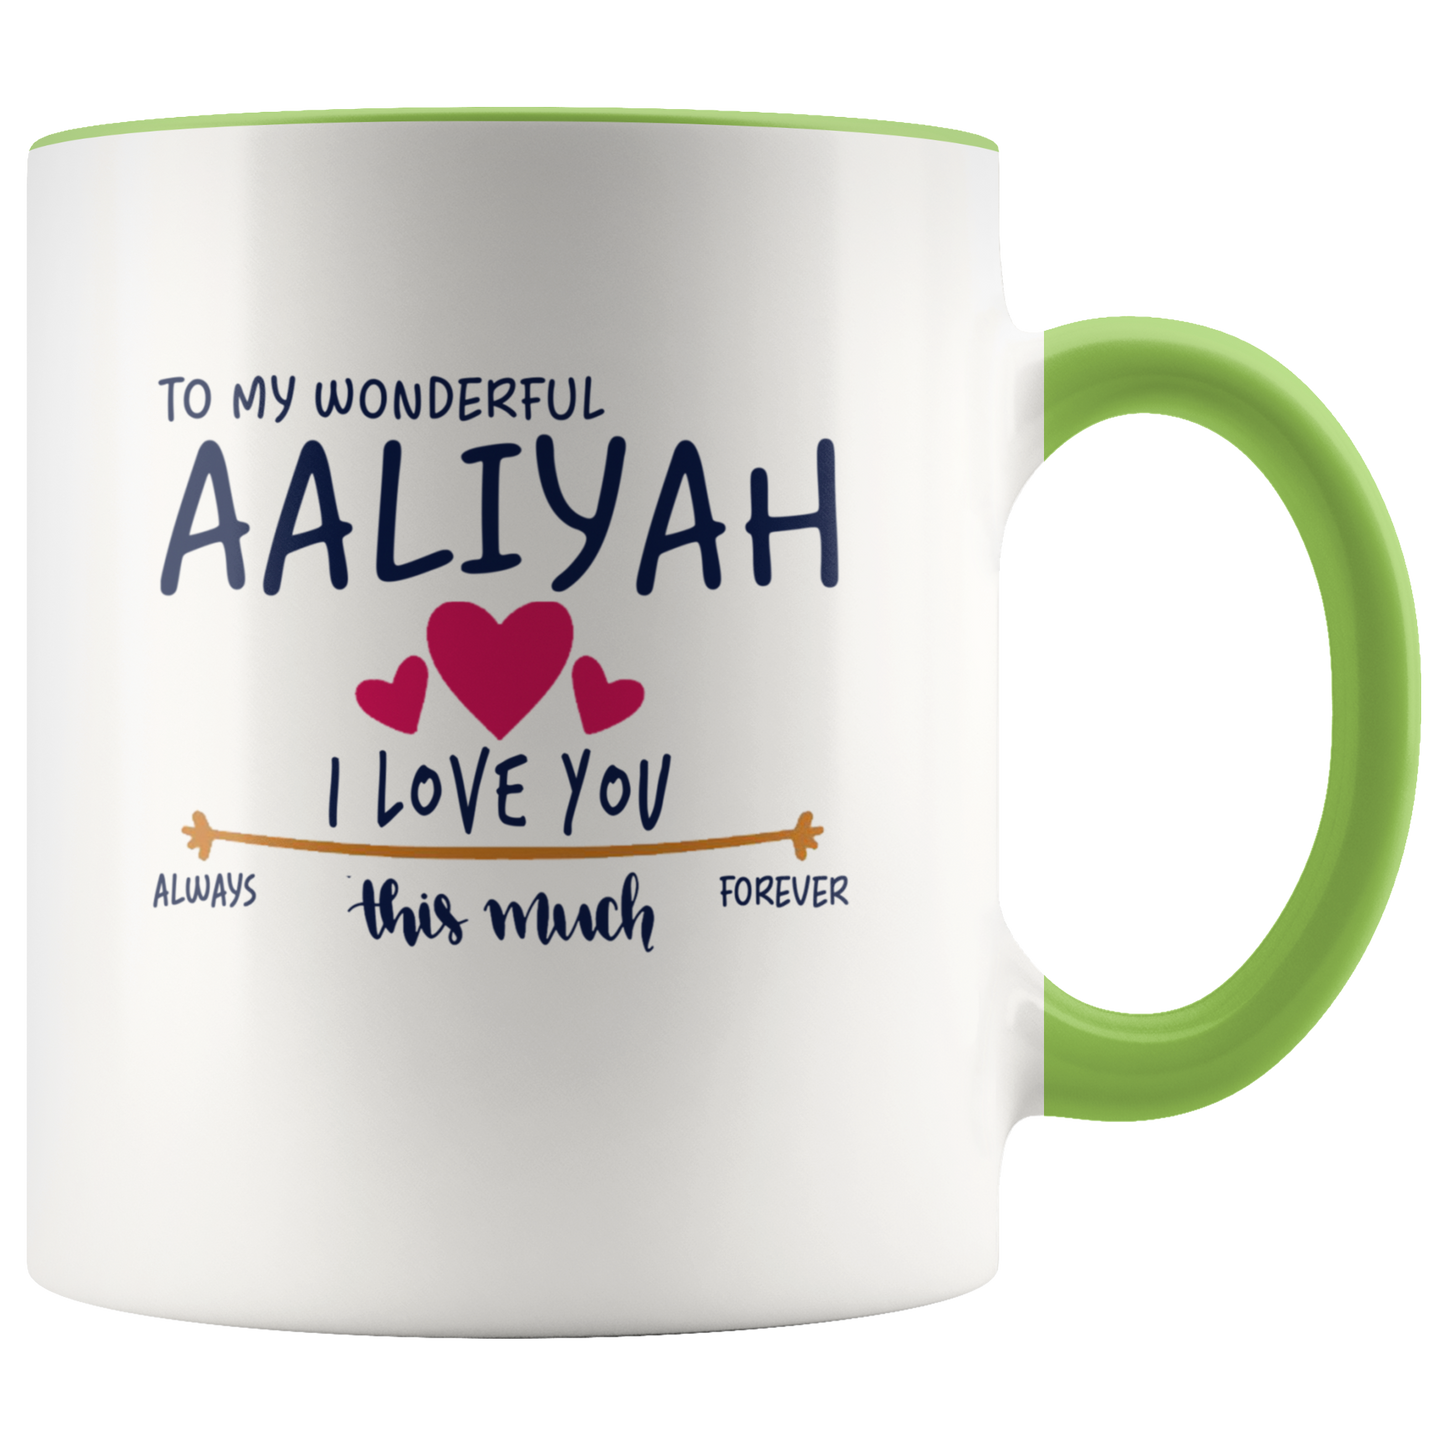 M-21259969-sp-23480 - Valentines Day Coffee Mug With Name Aaliyah - To My Wonderfu